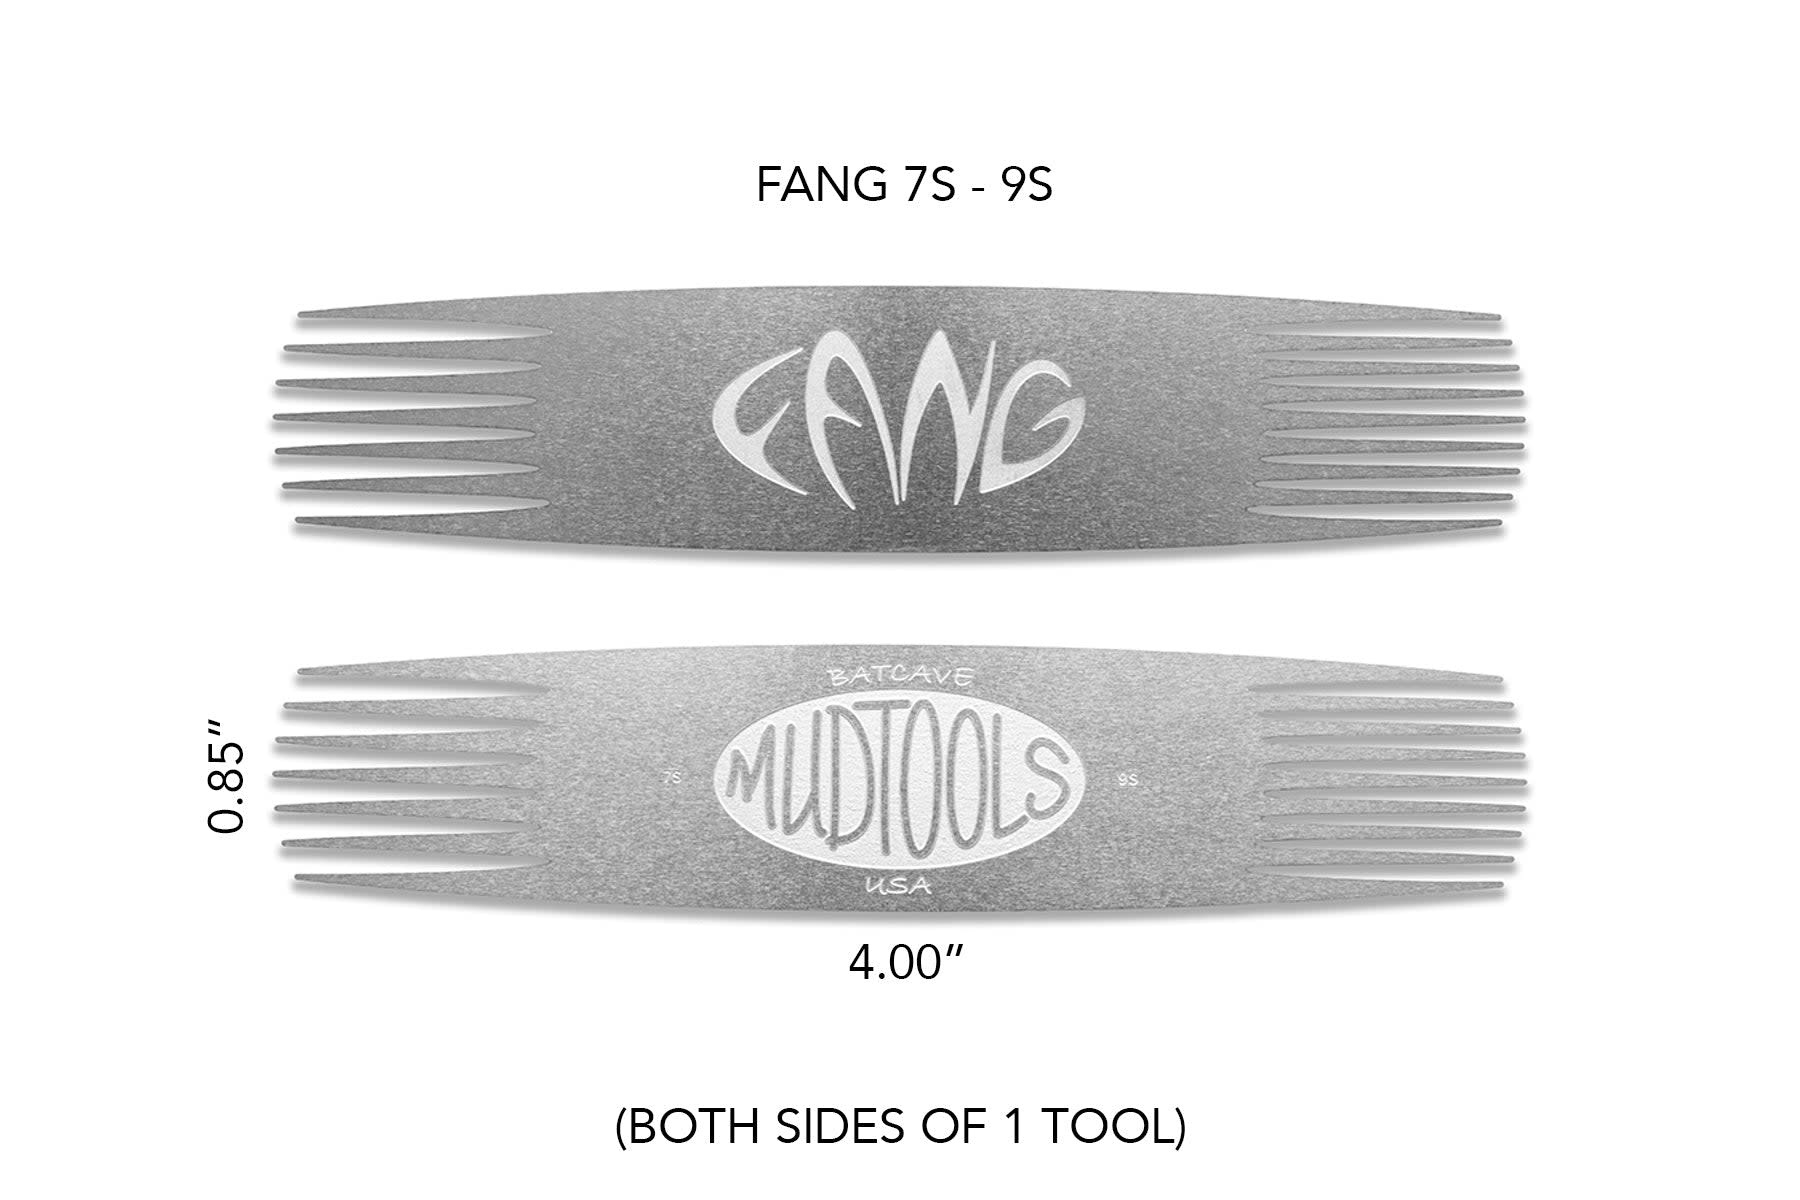 Mudtools FANG SS Scoring Tool (Small) 7S-9S